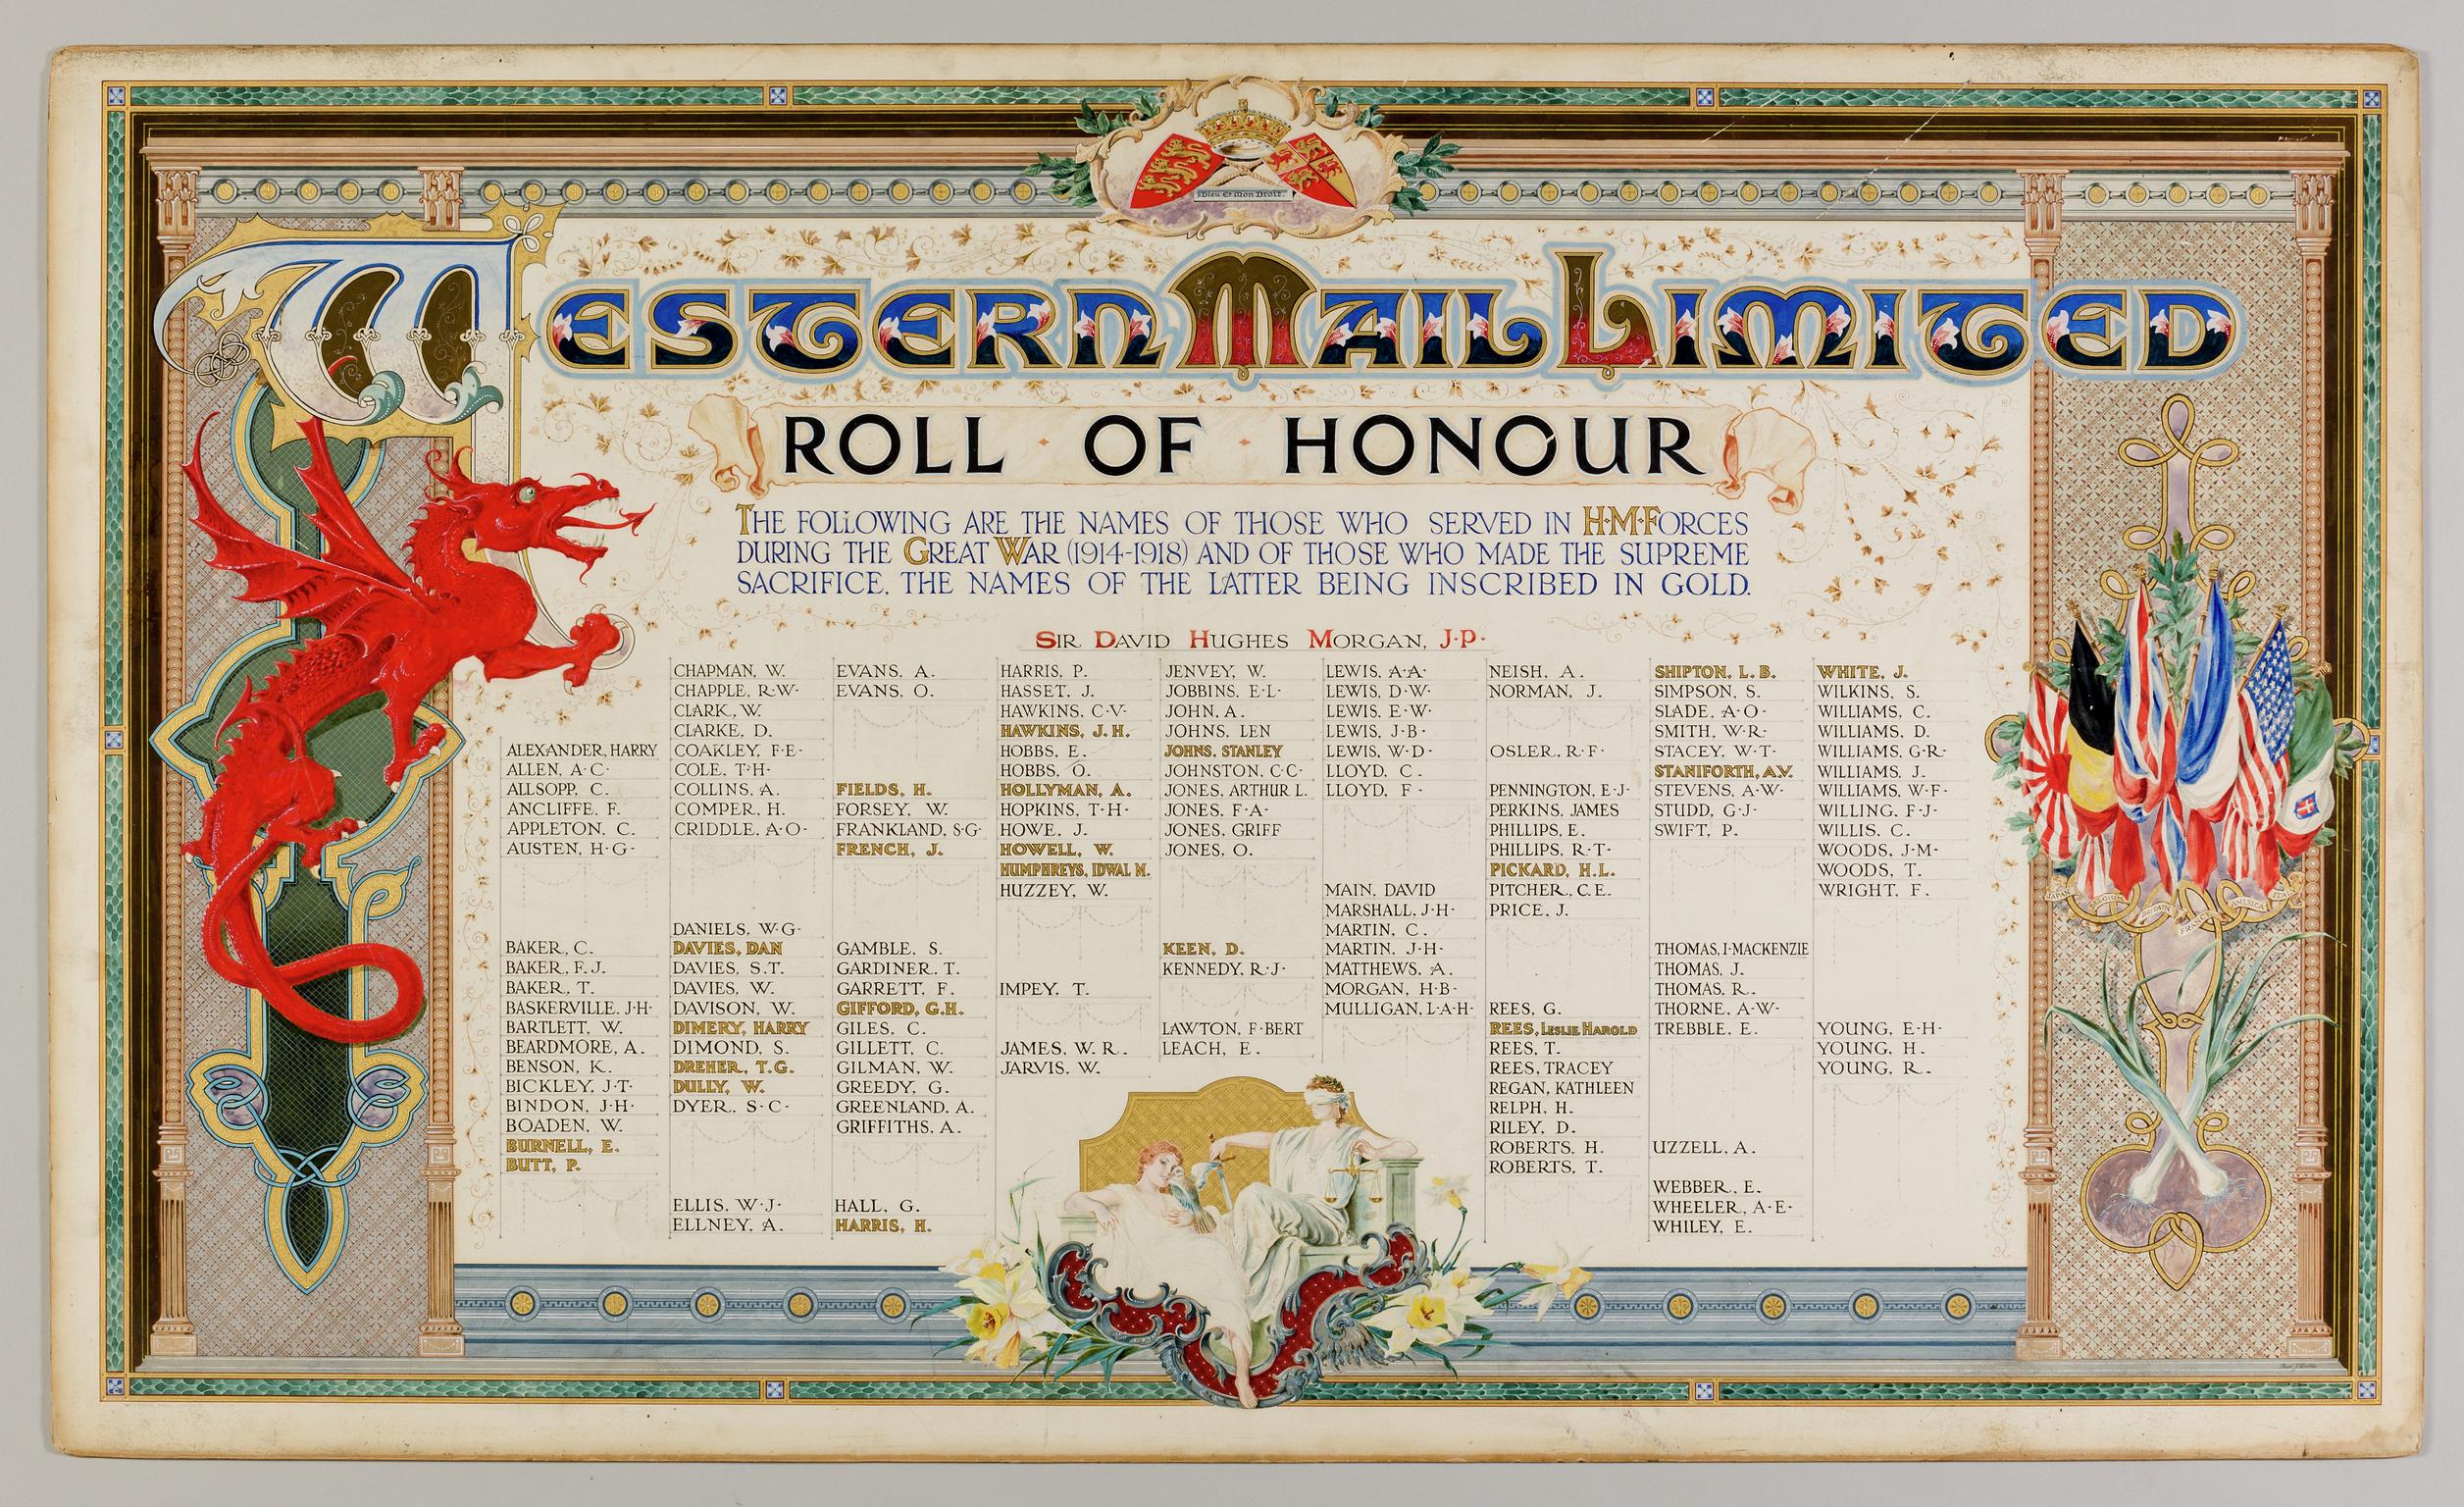 Western Mail Ltd, roll of honour